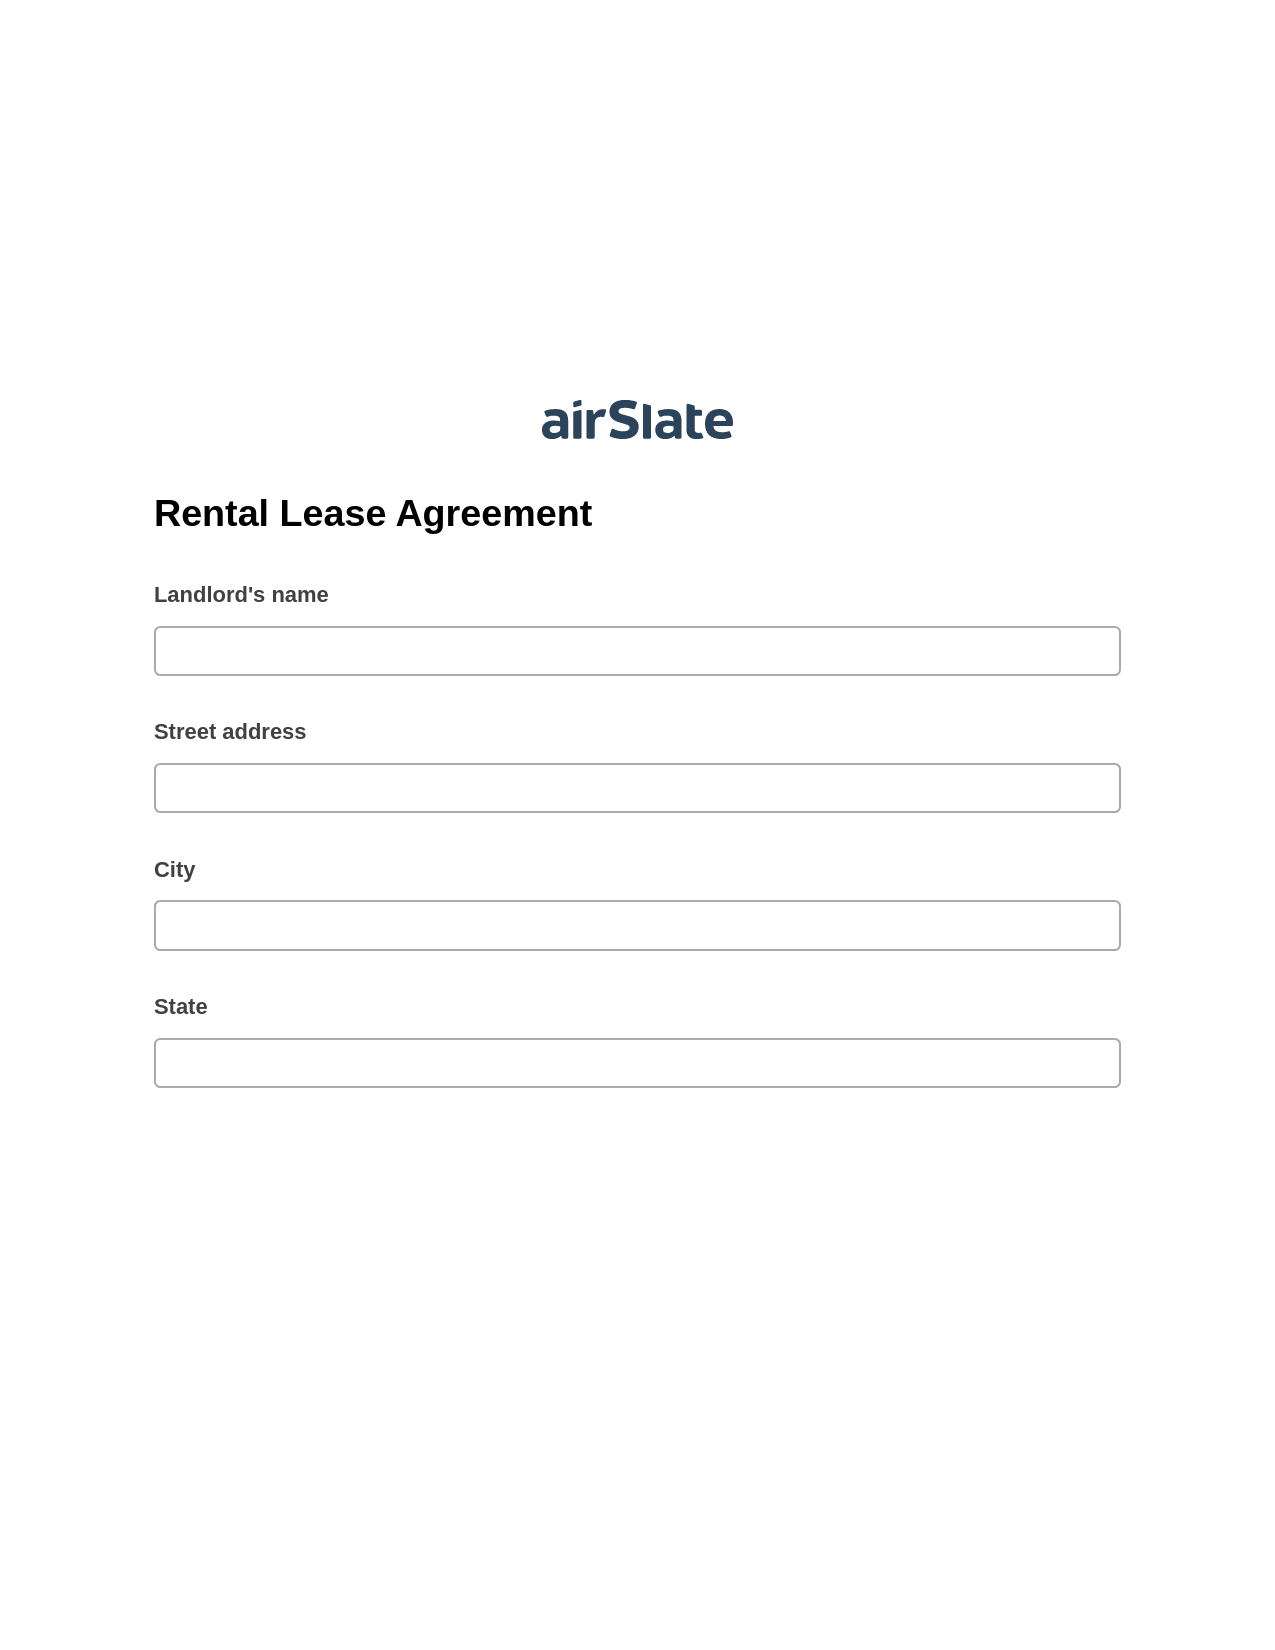 Rental Lease Agreement Pre-fill from Google Sheet Dropdown Options Bot, Invoke Salesforce Process Bot, Email Notification Postfinish Bot